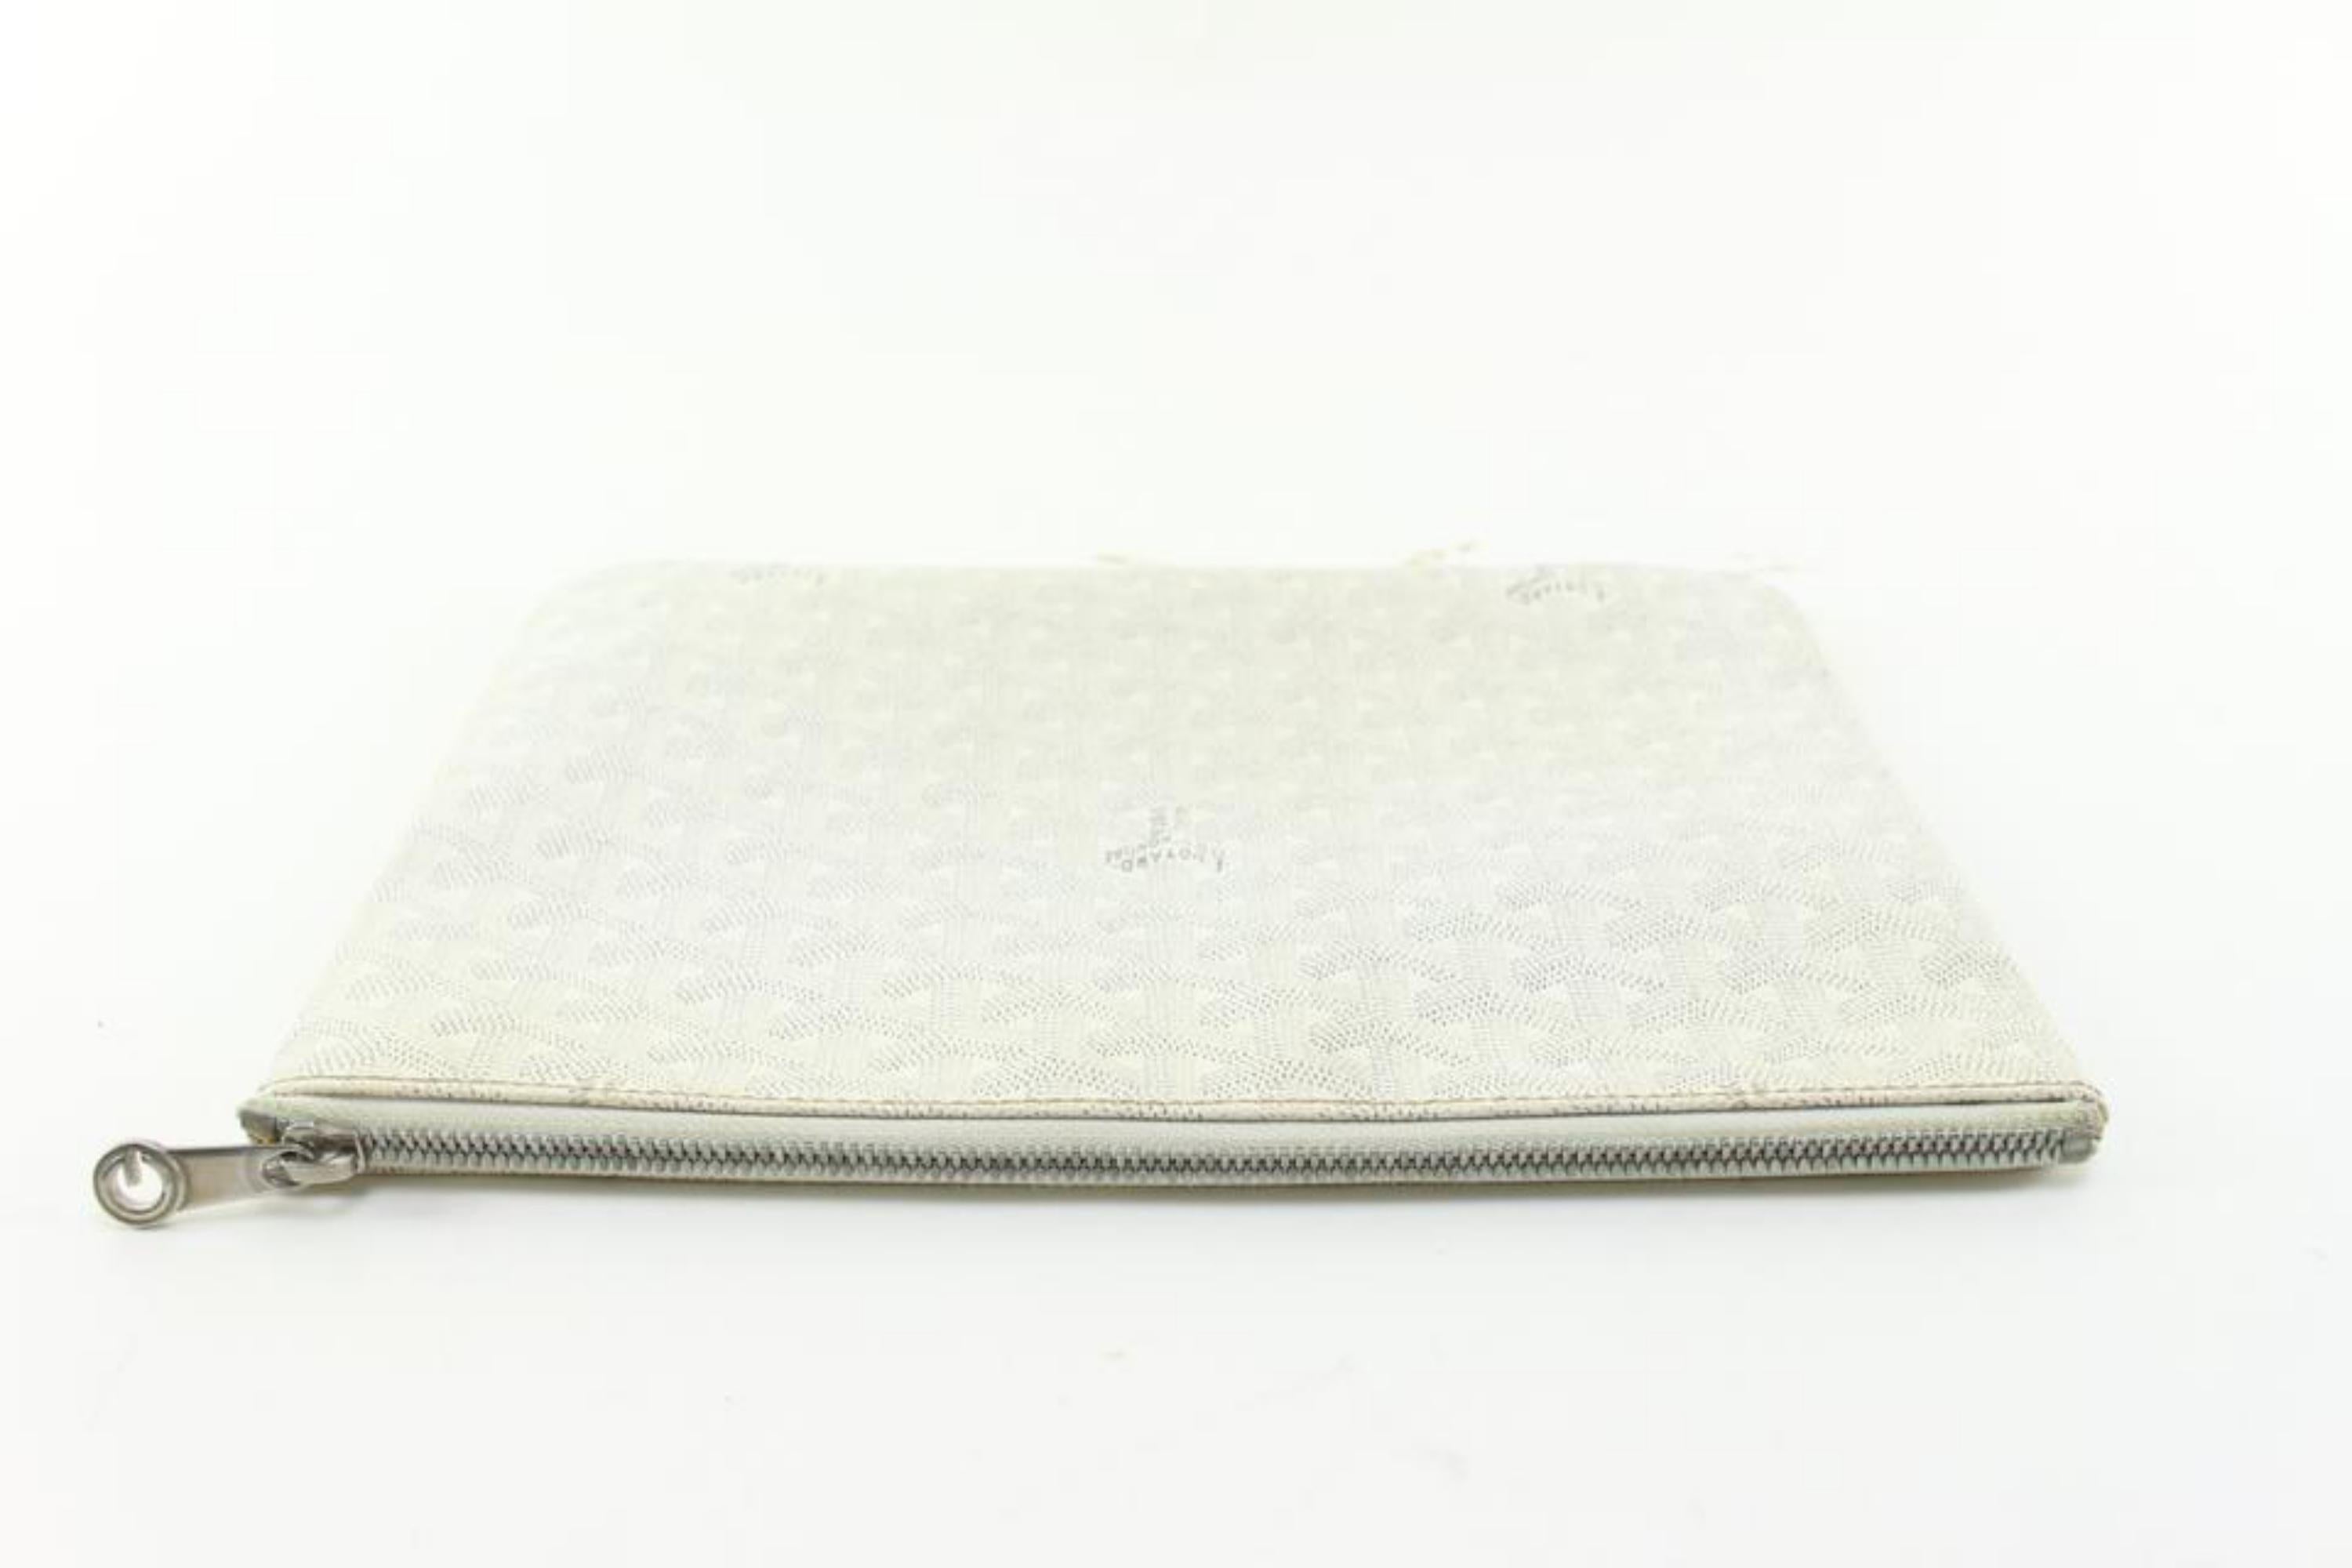 goyard wallet